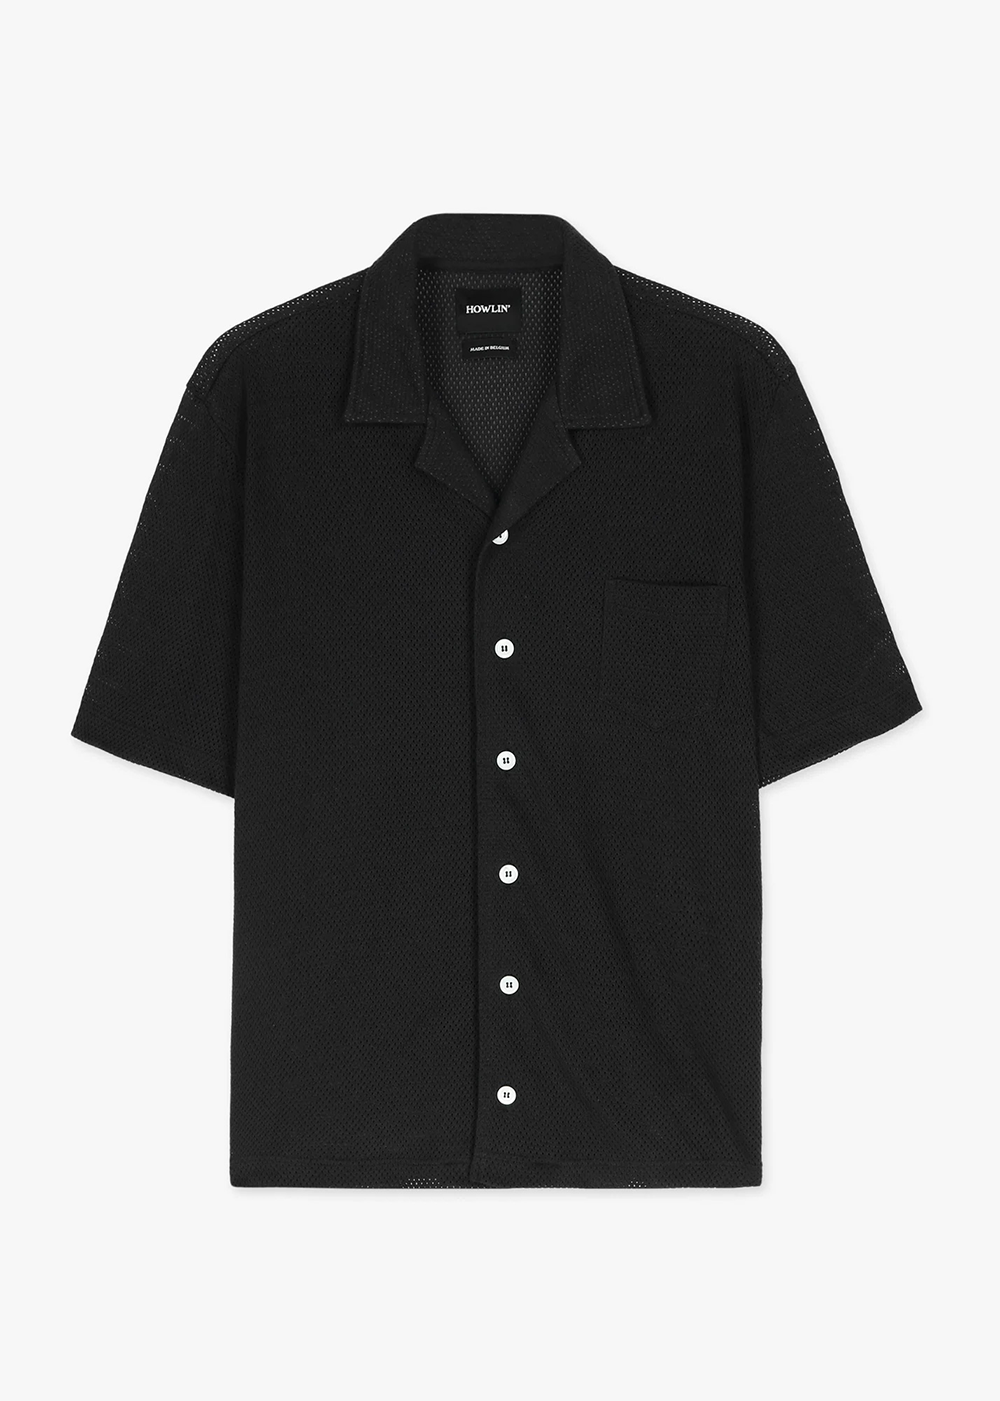 Bass Culture Mesh Shirt - Black - Howlin' Knitwear Canada - Danali - 241663M192008